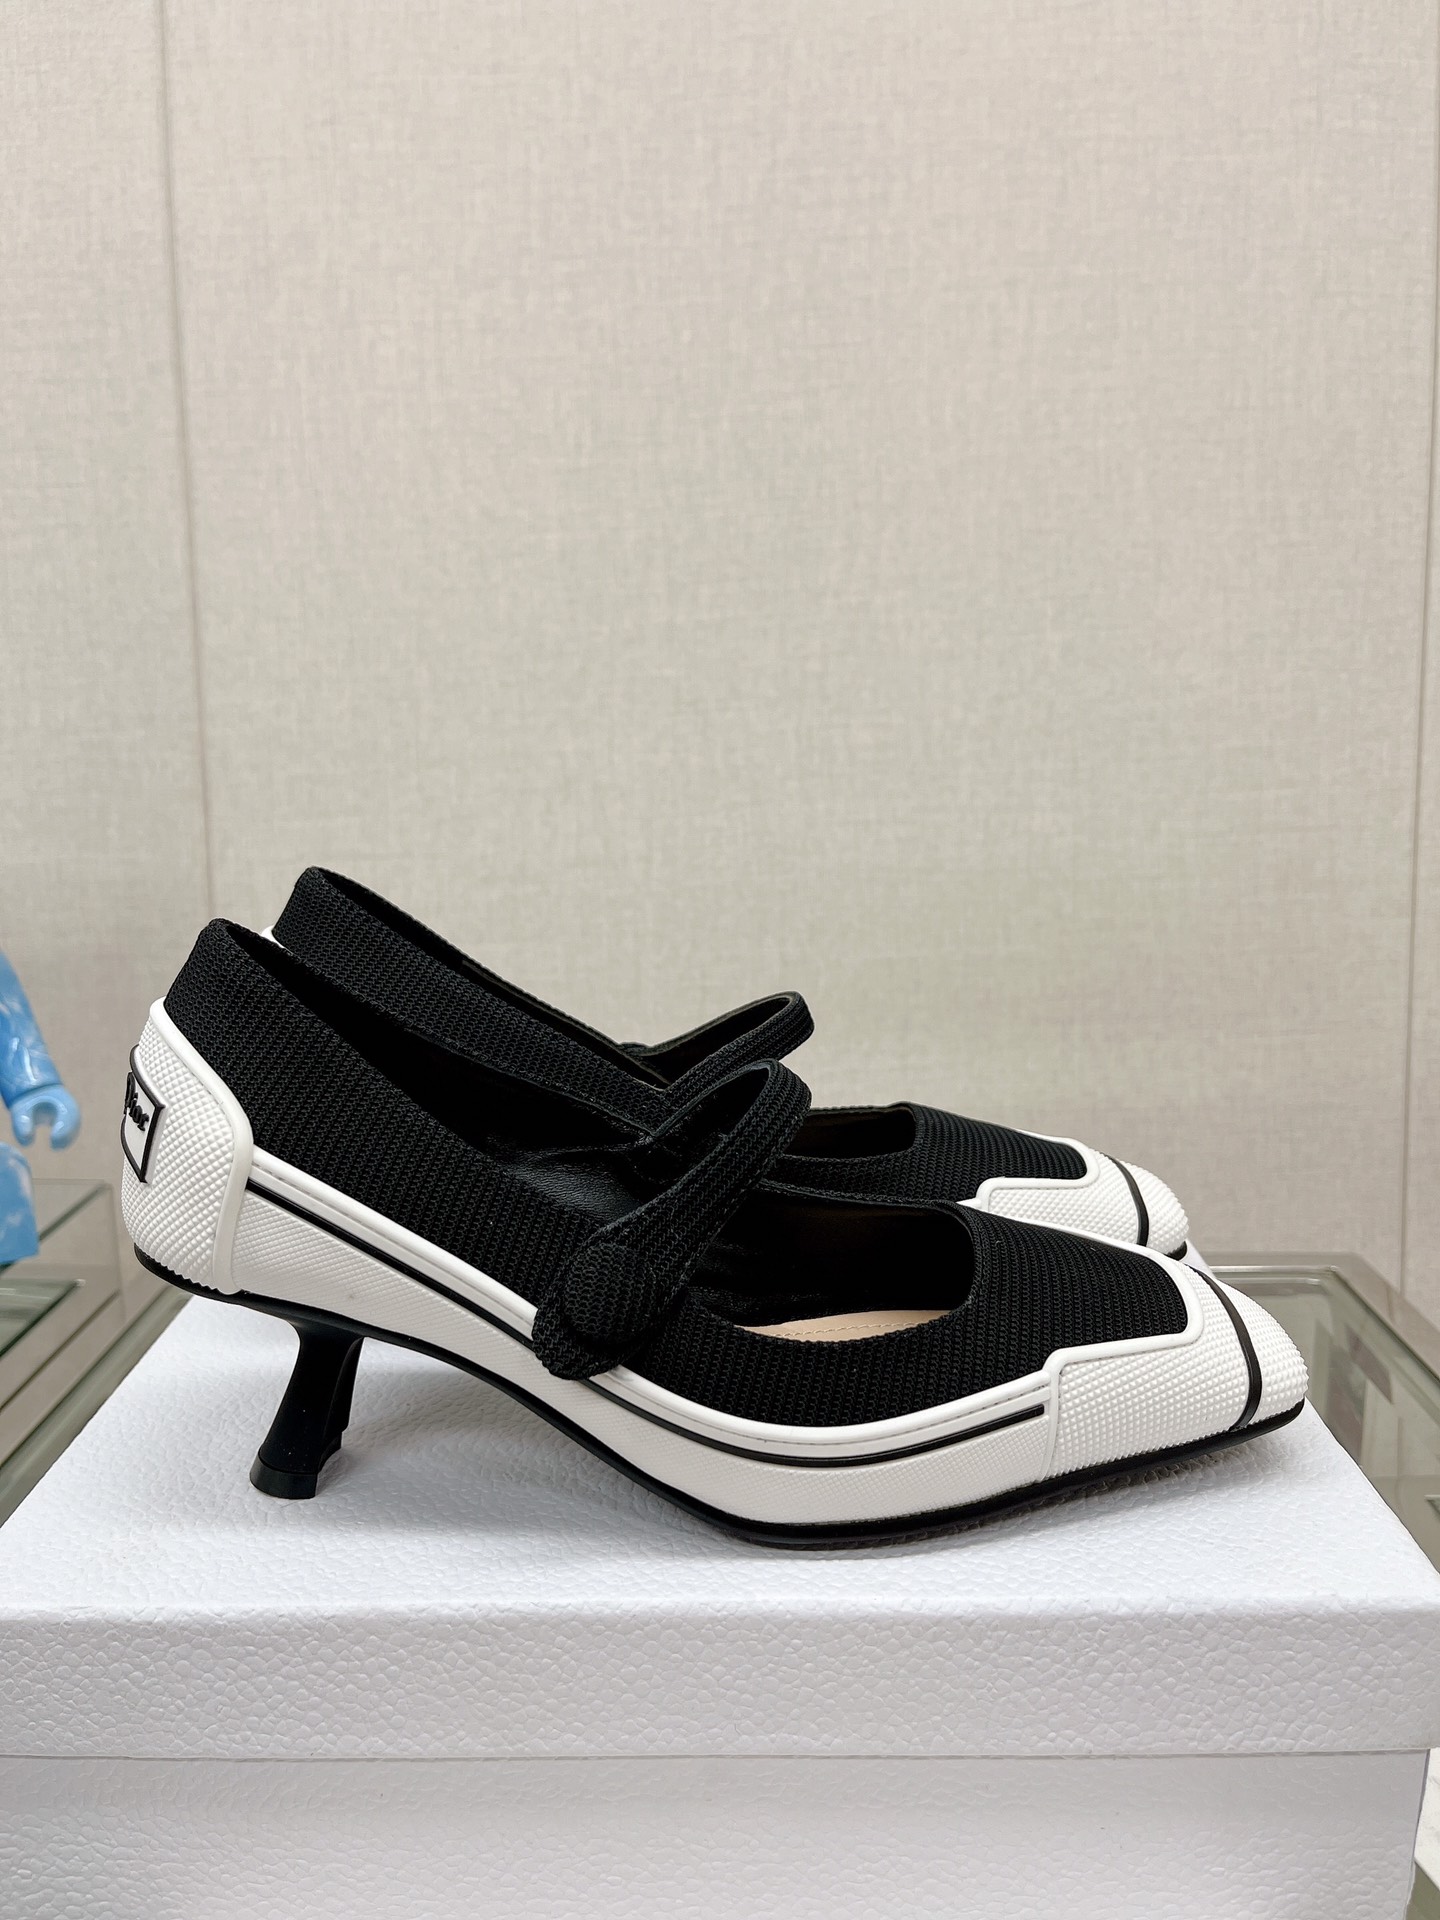 Dior Half Slippers High Heel Pumps Mules Single Layer Shoes Black White Rubber Sheepskin Fashion Sweatpants